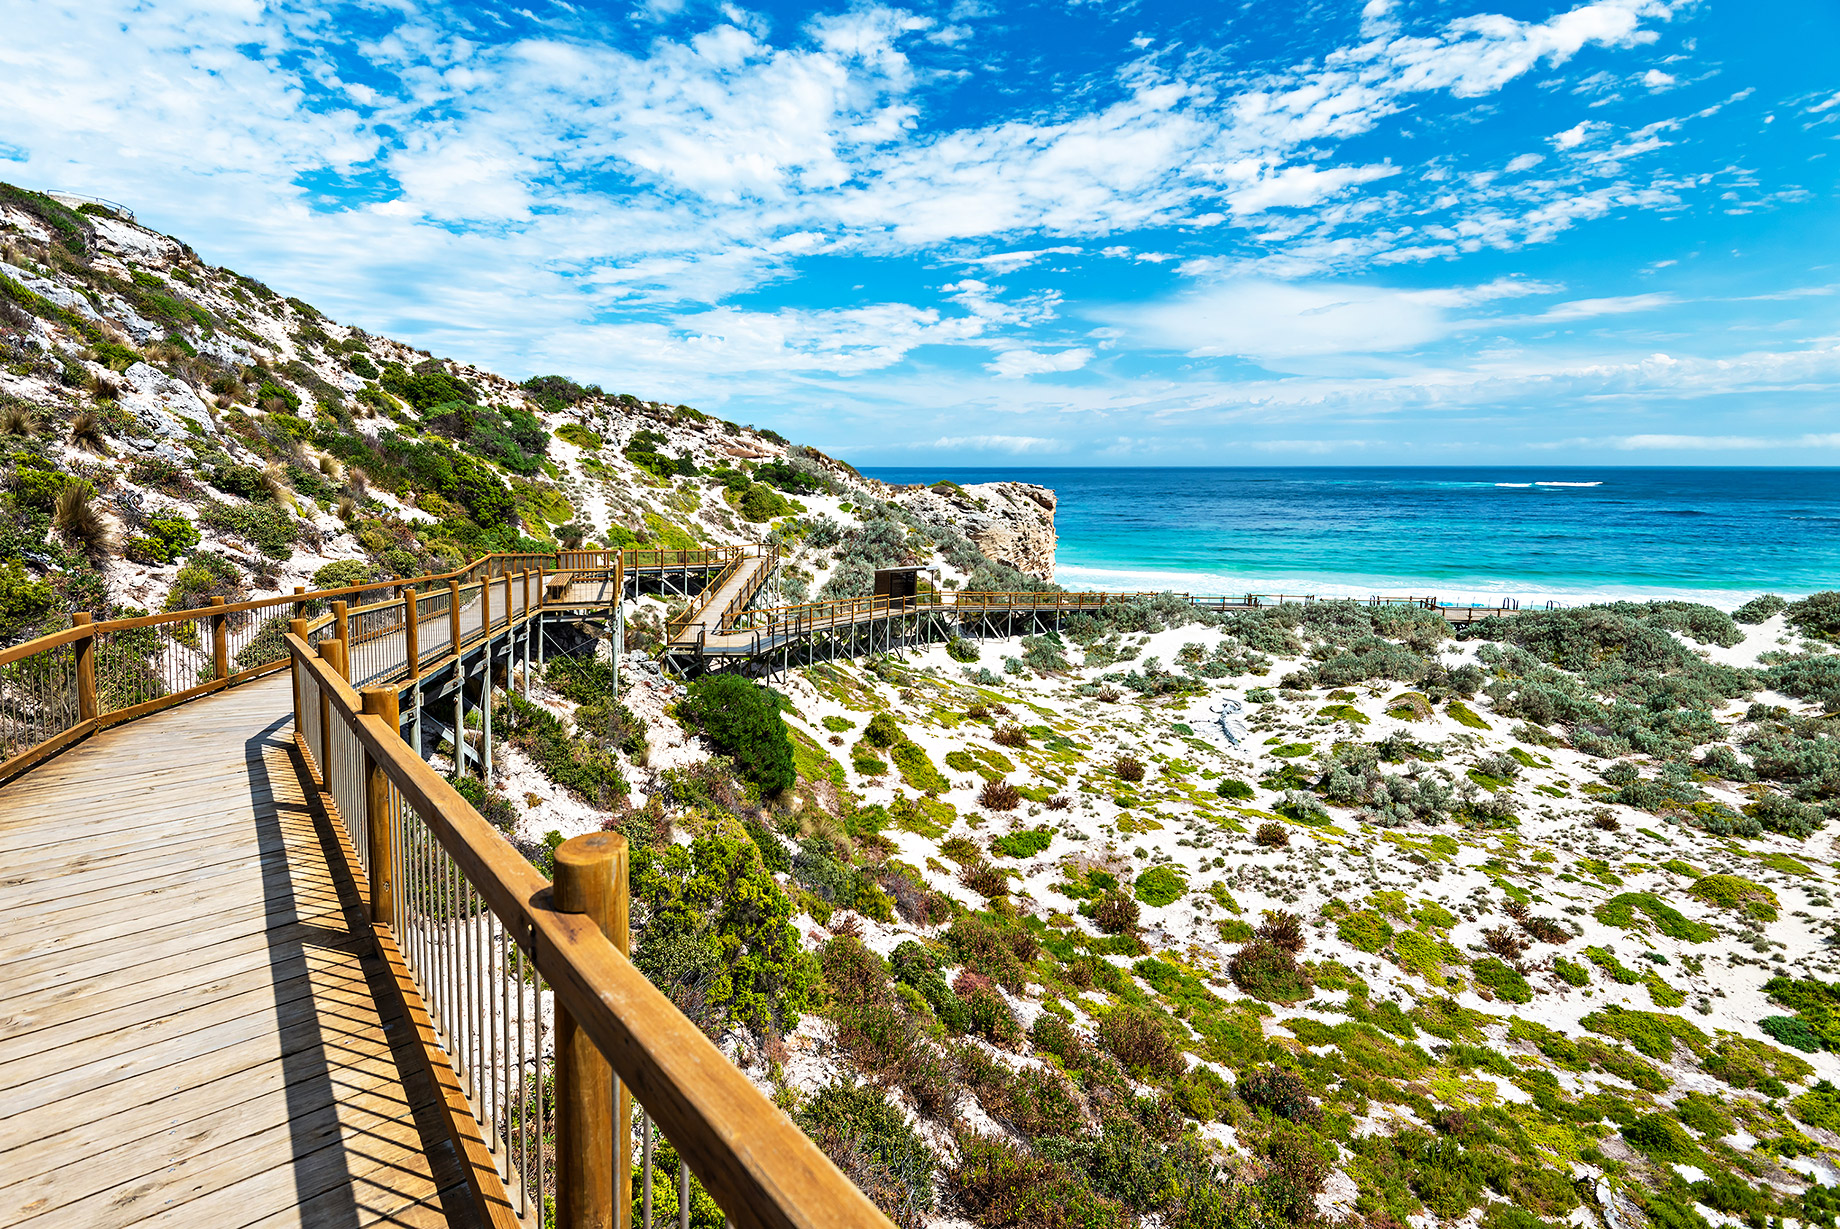 Picturesque Seal Bay Boardwalk - Kangaroo Island, South Australia